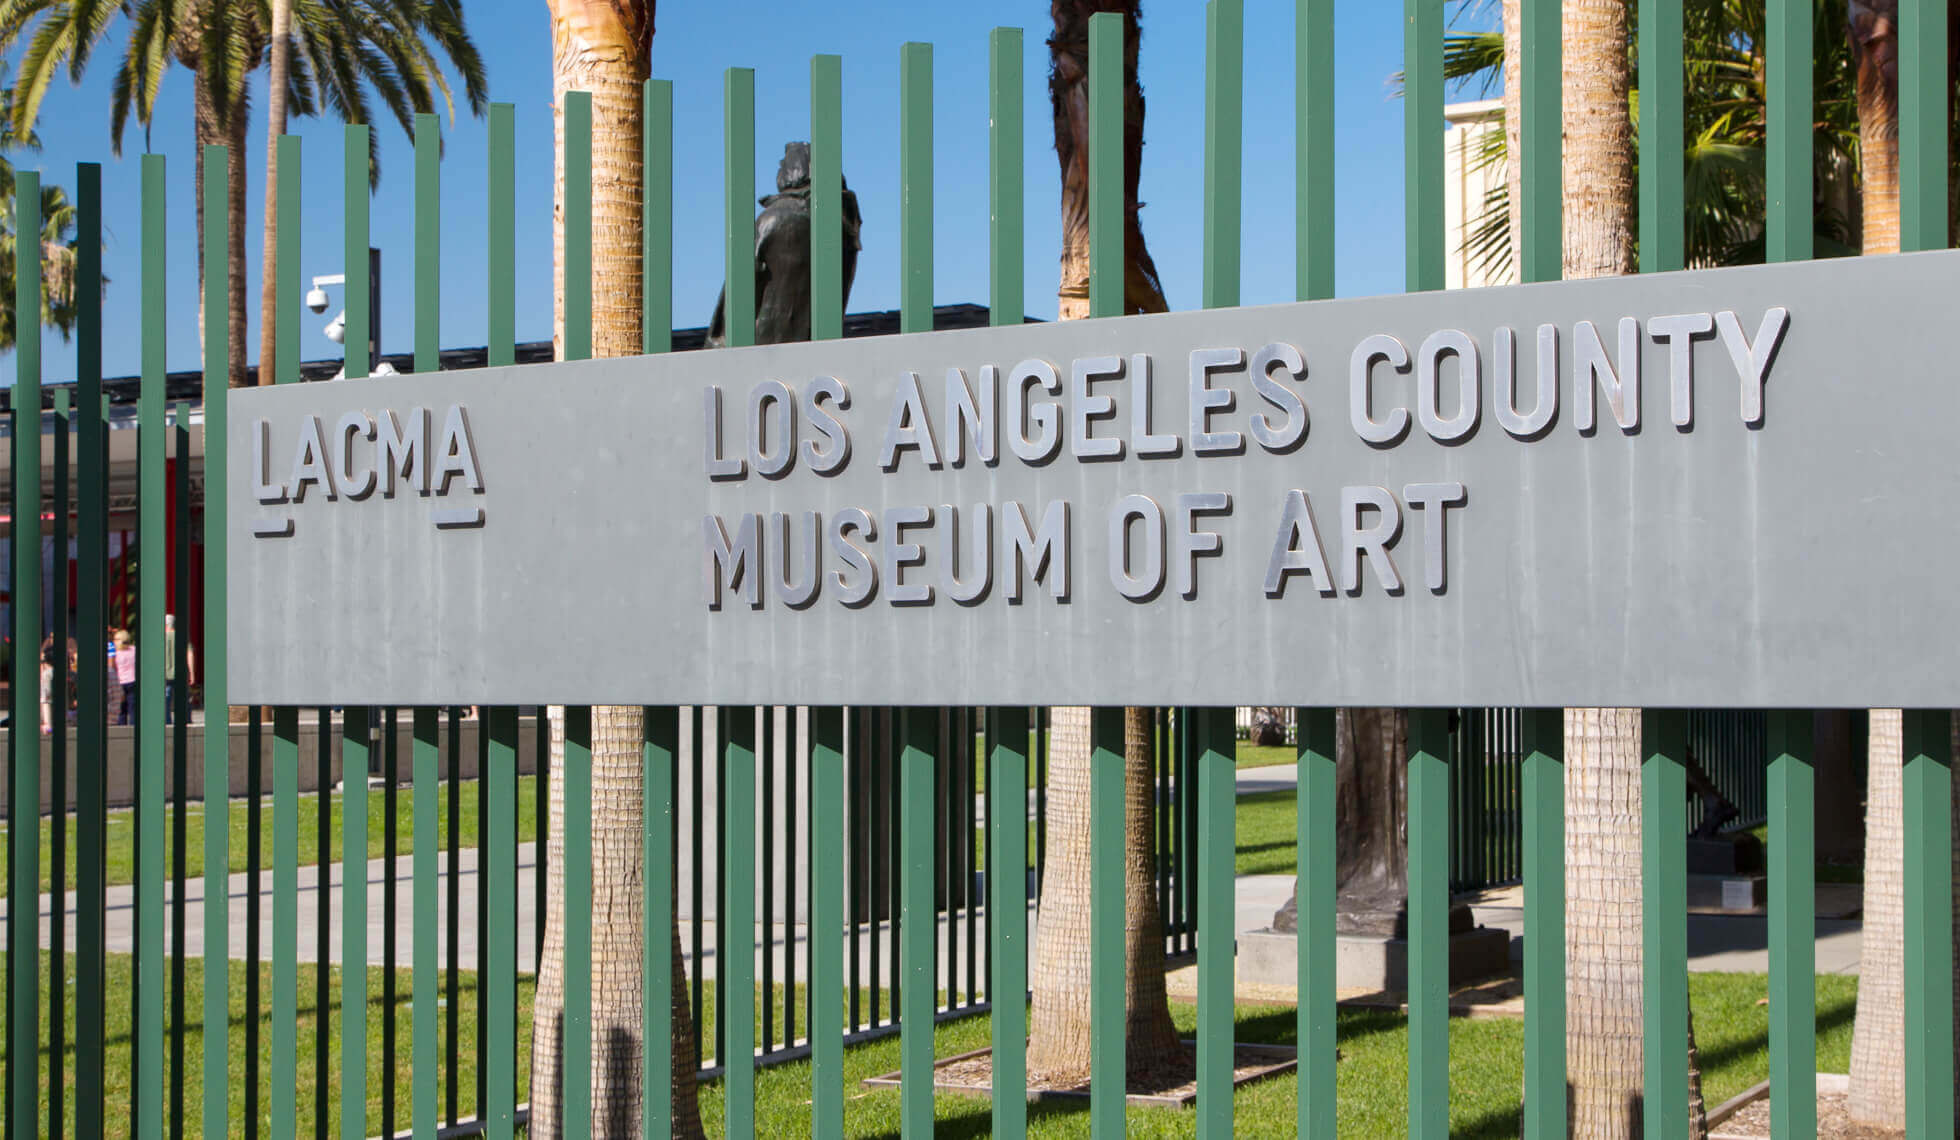 “THE LOS ANGELES COUNTY MUSEUM OF ART” MUSEUM TERBESAR DI LOS ANGELES